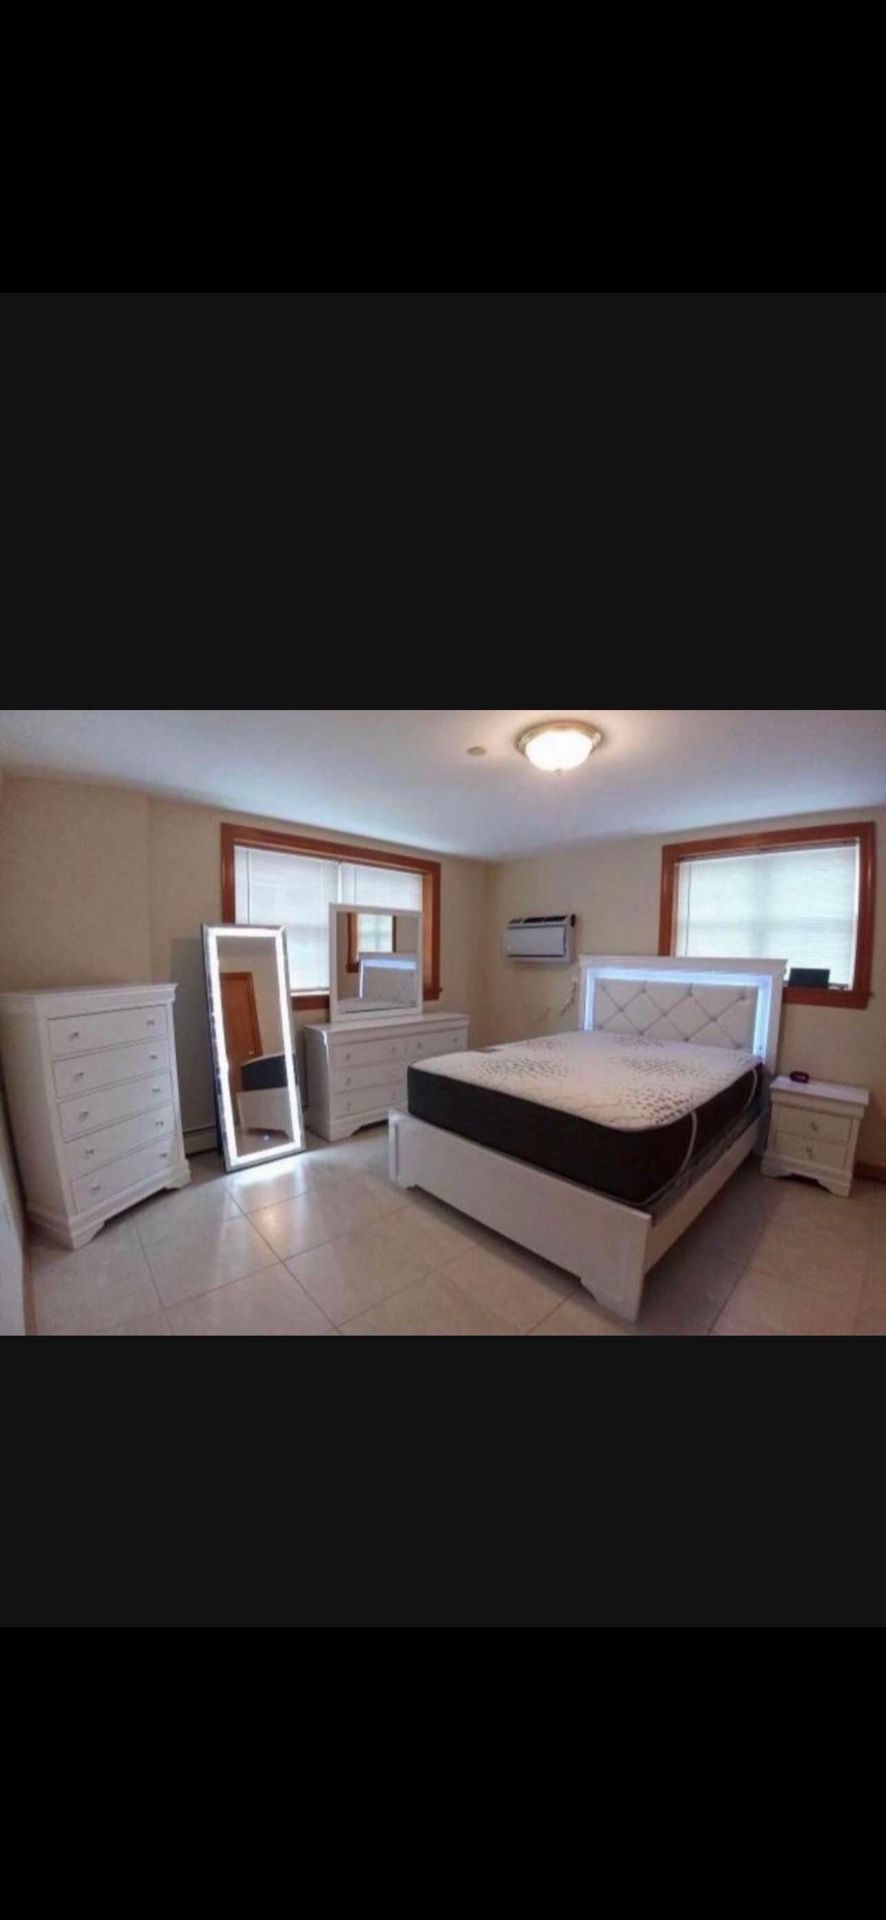 Brand New Complete MODERN Bedroom Set For $999